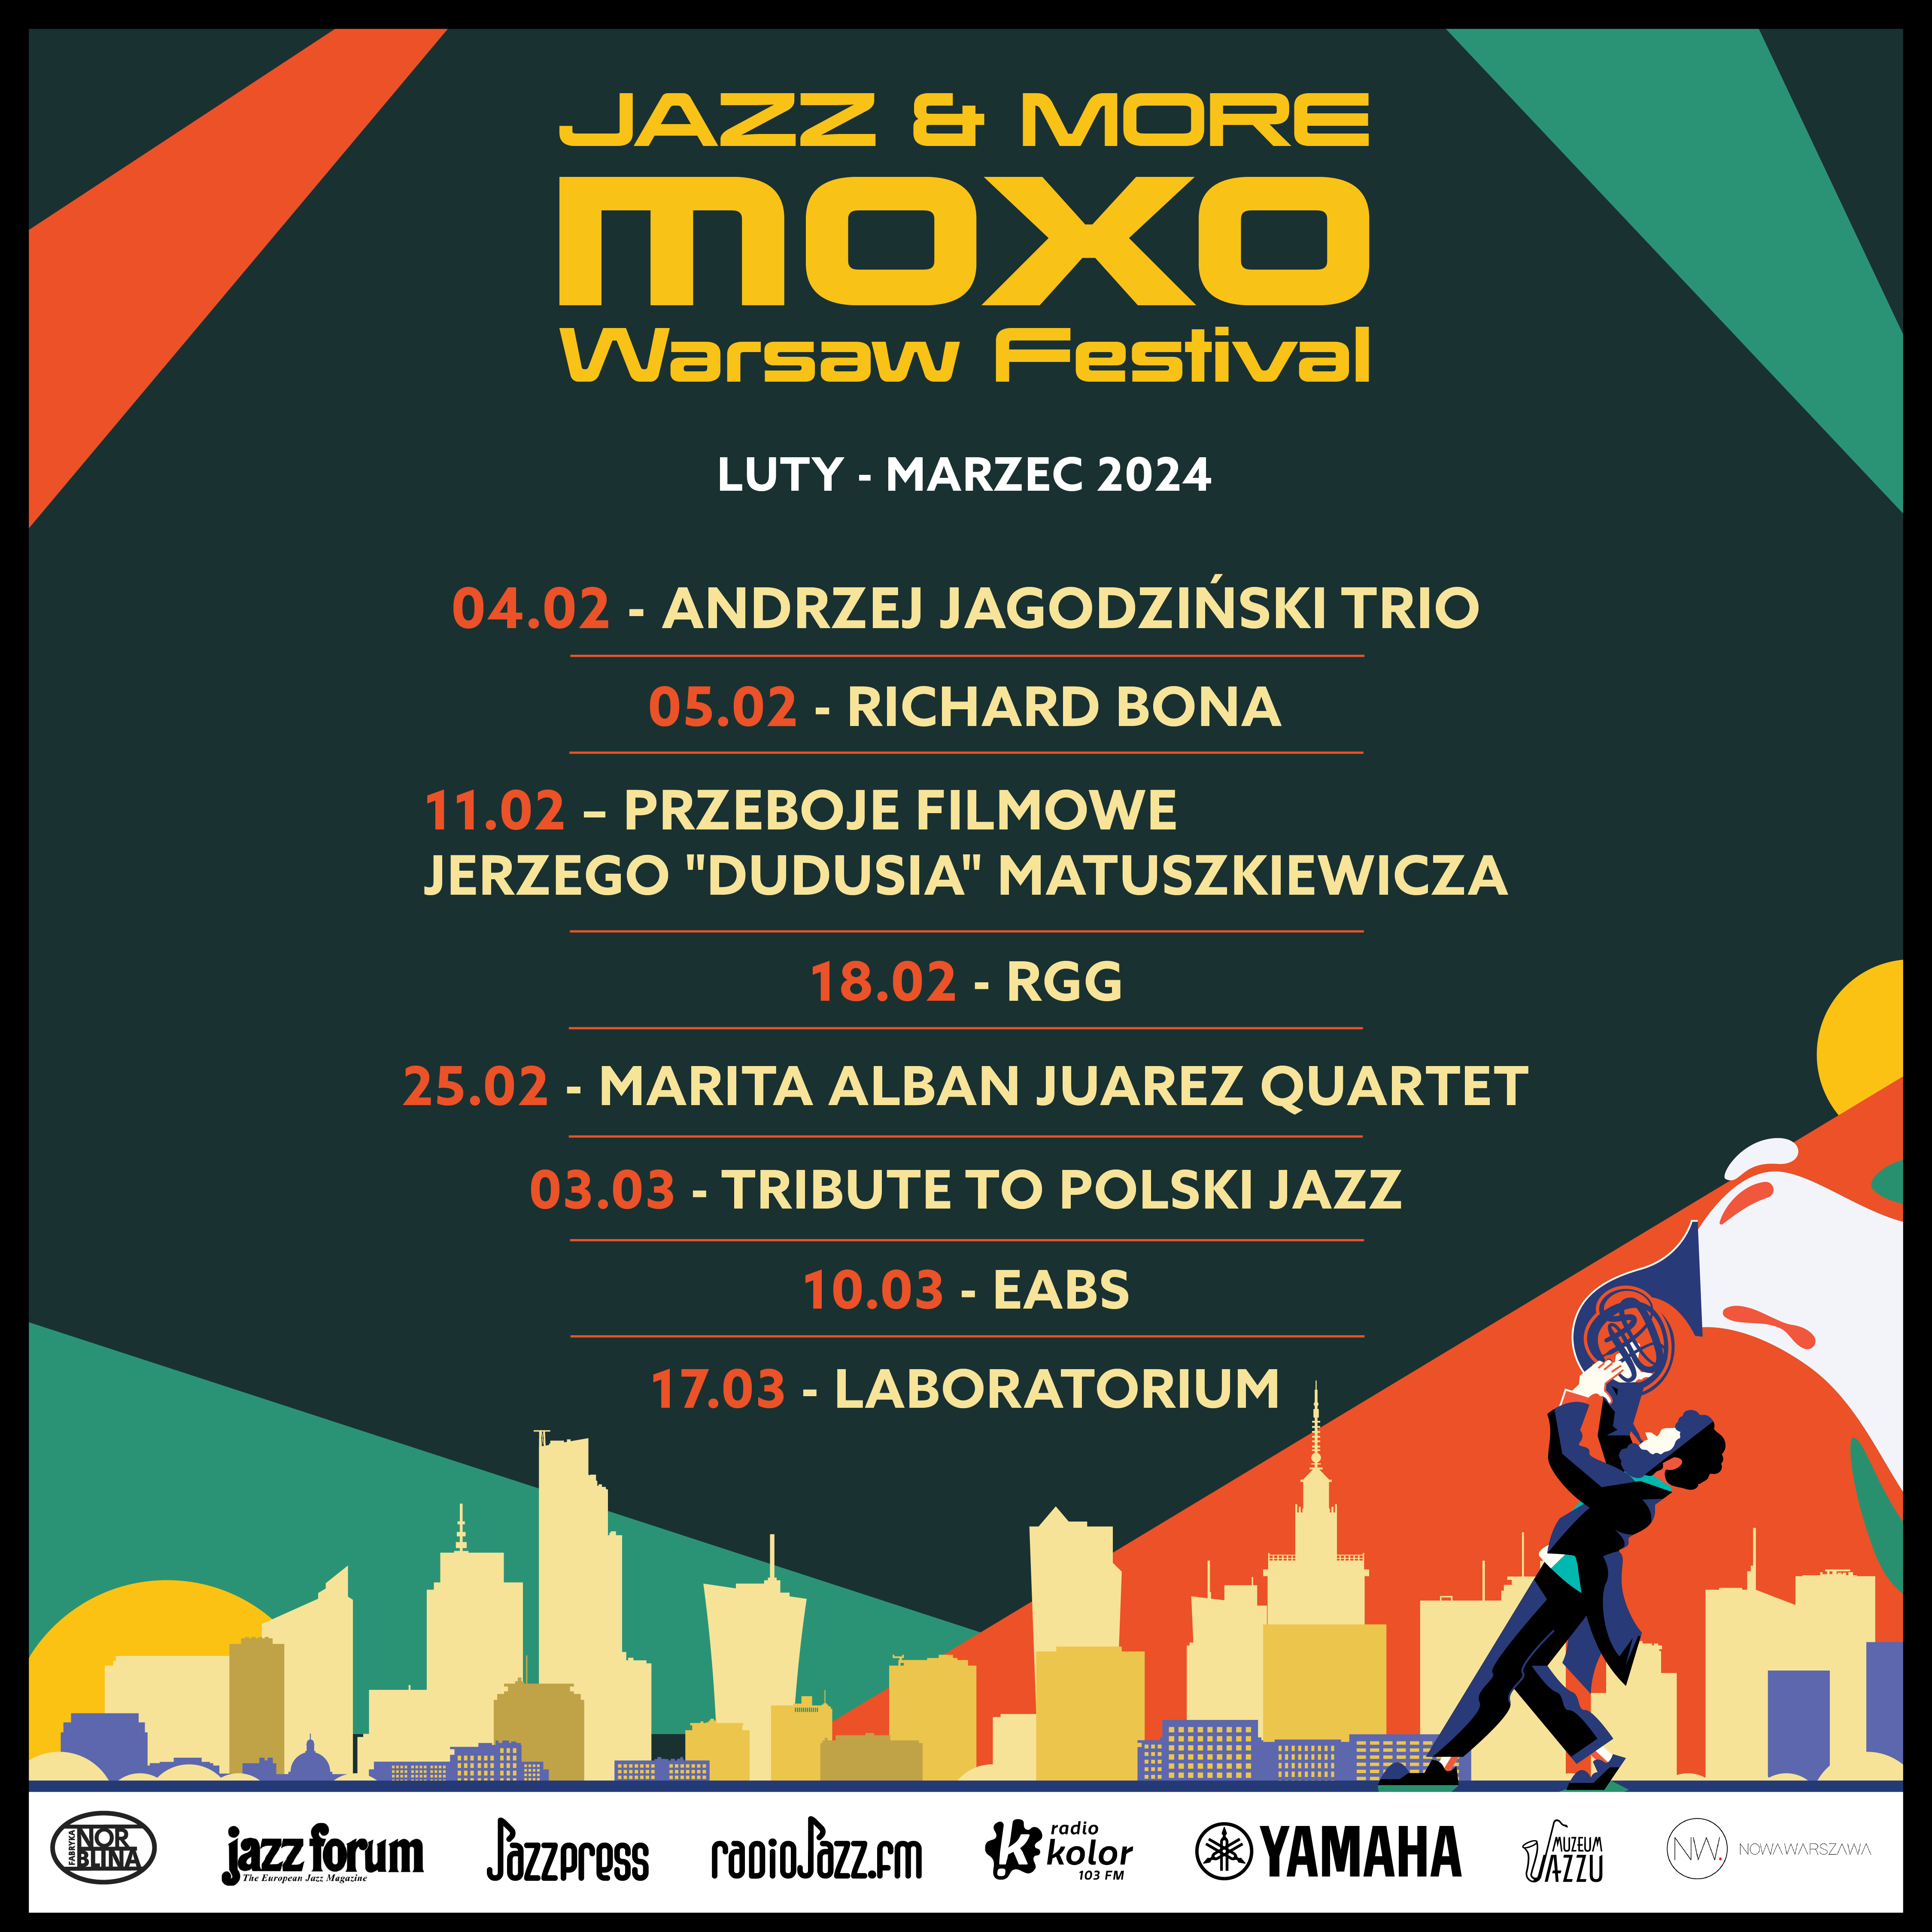 Jazz & More MOXO Warsaw Festival – rusza druga edycja festiwalu